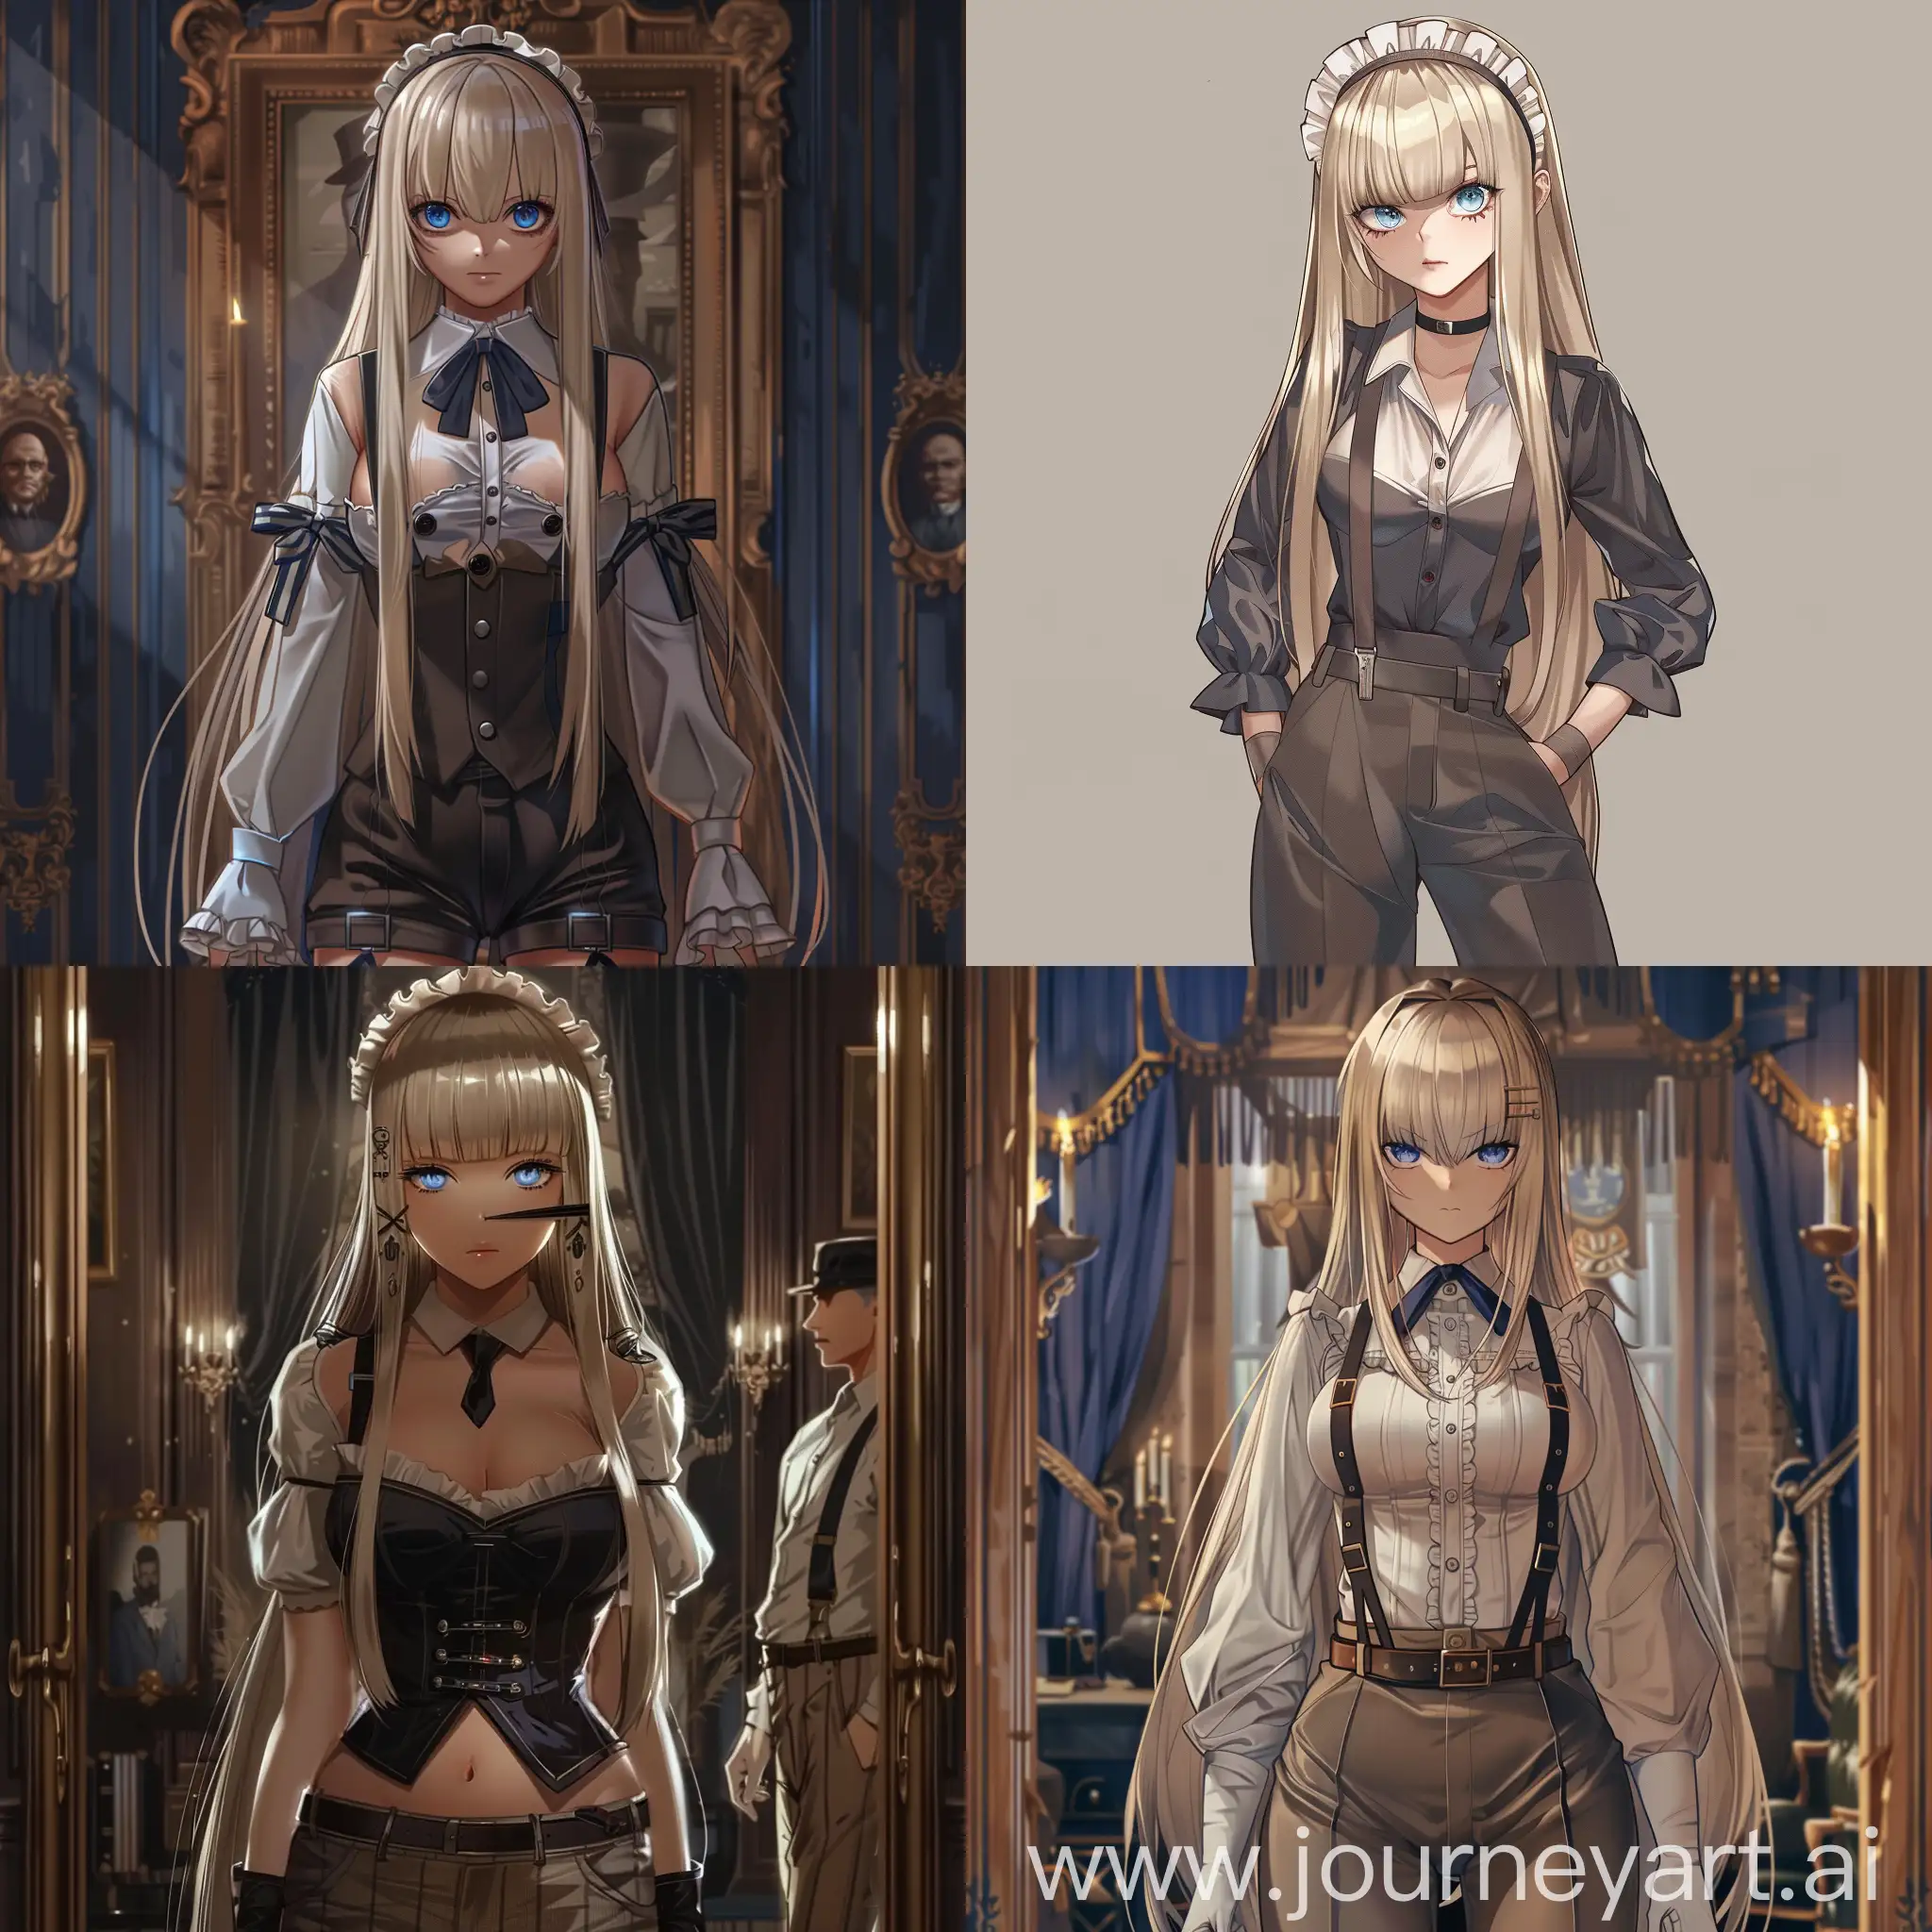 Elegant-Blonde-Maid-Leading-Mafia-in-Anime-Style-Portrait-Art